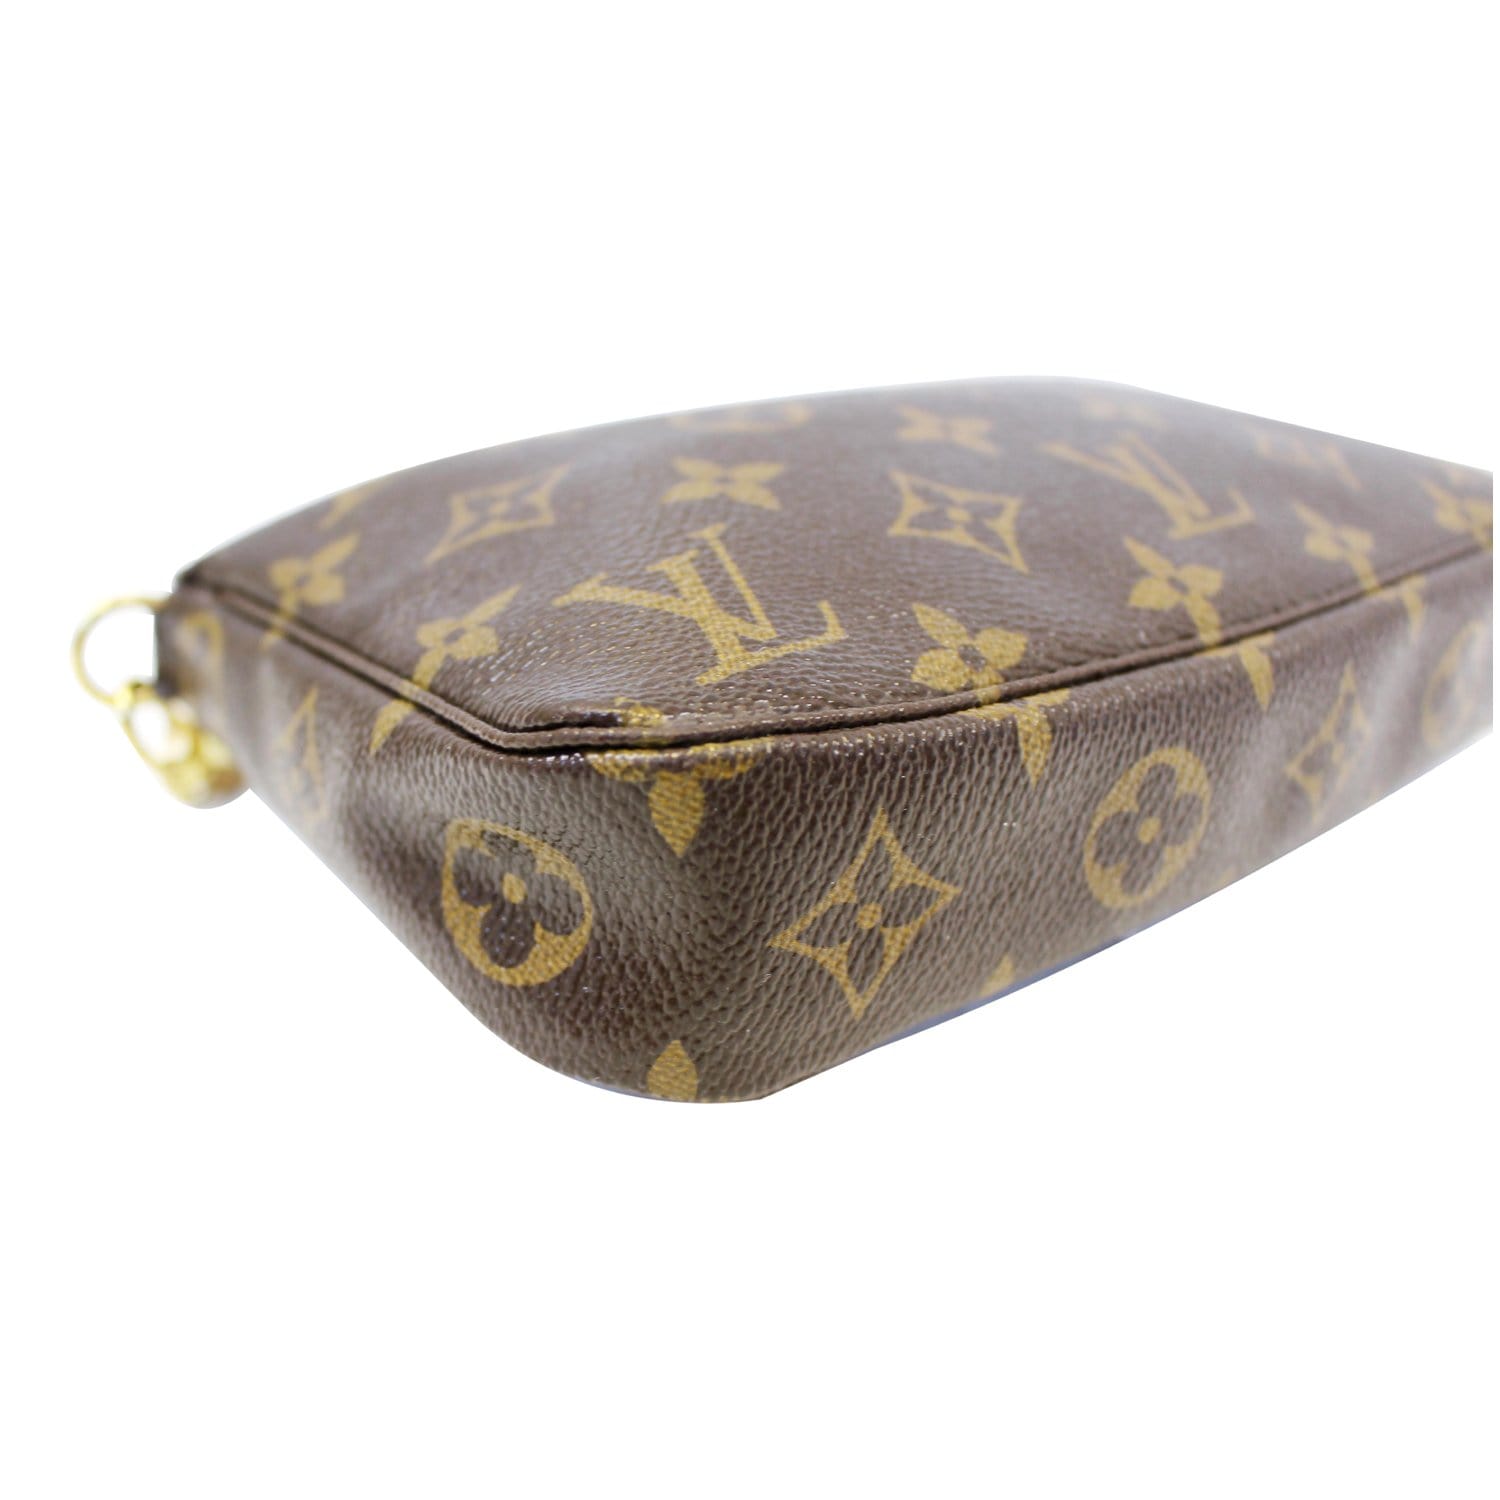 Louis Vuitton Pochette in Monogram Handbag - Authentic Pre-Owned Designer Handbags